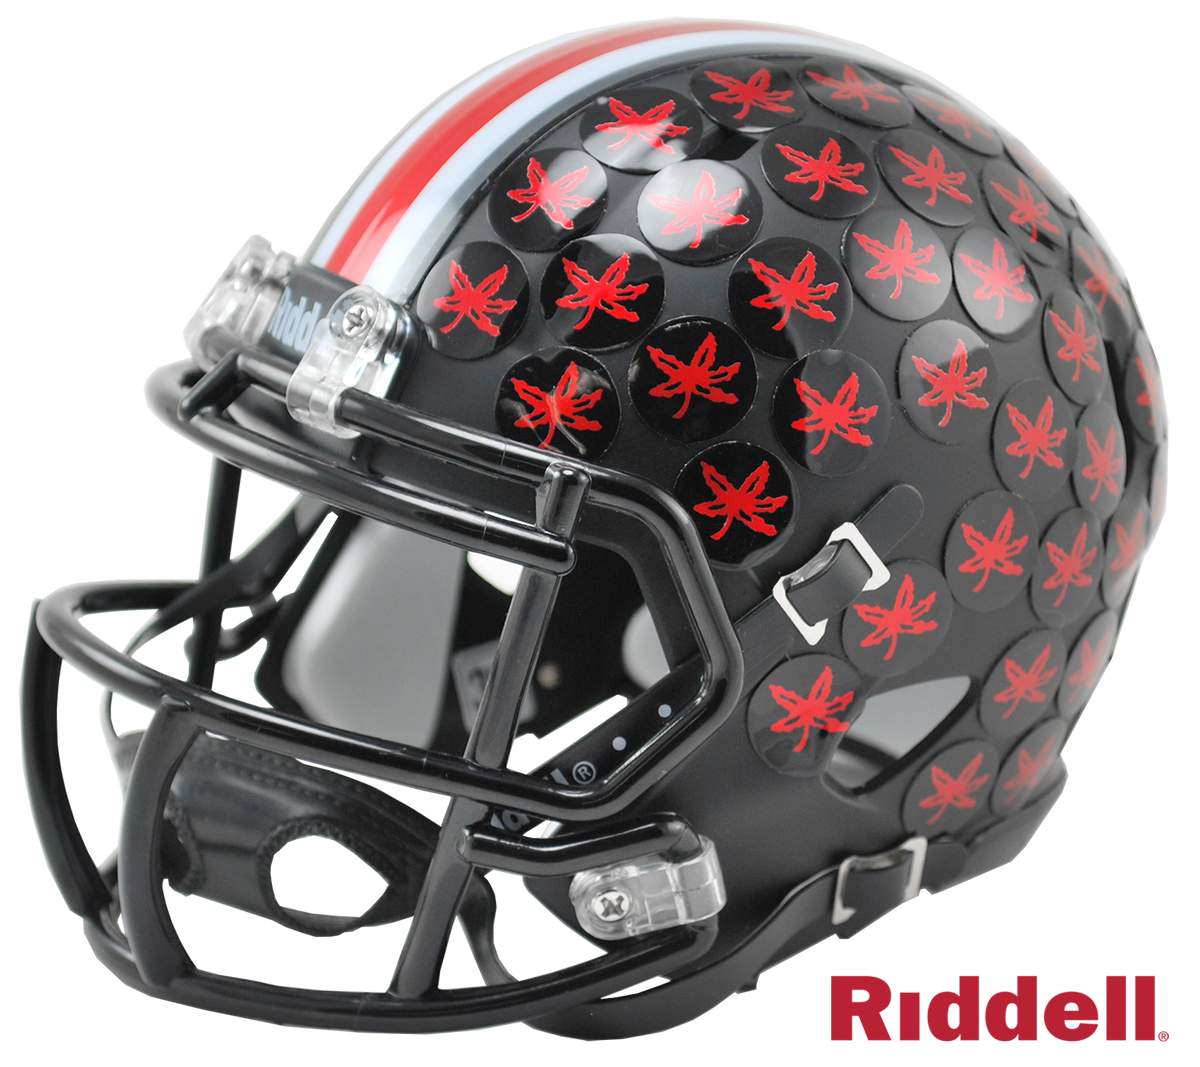 Ohio State Buckeyes Authentic Full Size SpeedFlex Helmet - Black